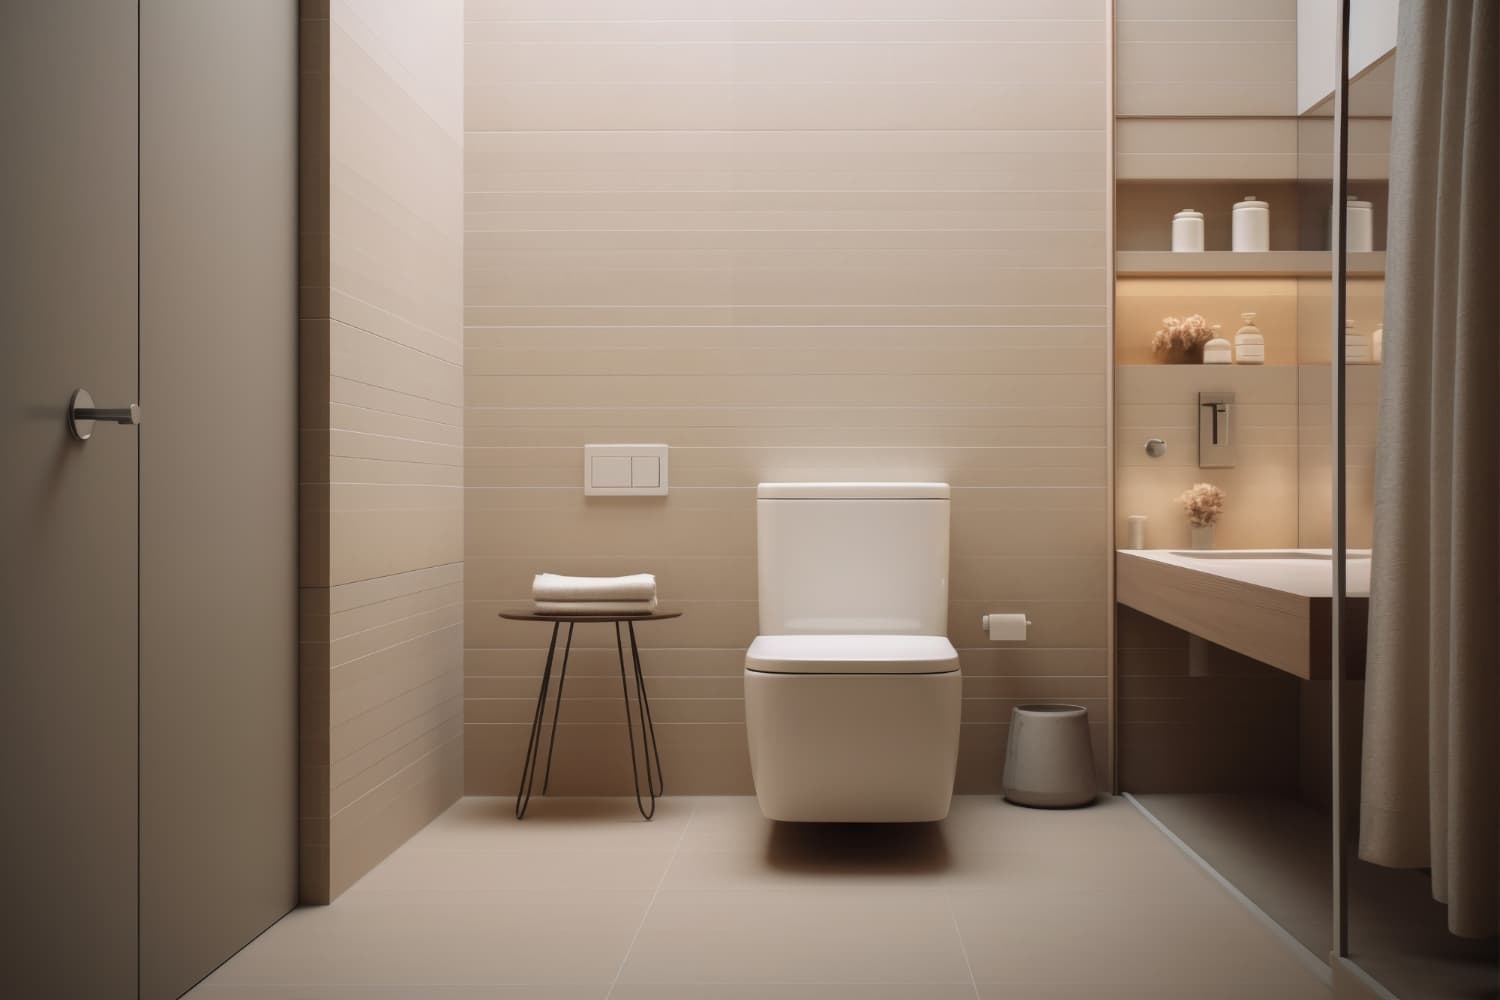 Inodoros con salida horizontal en baño de diseño moderno